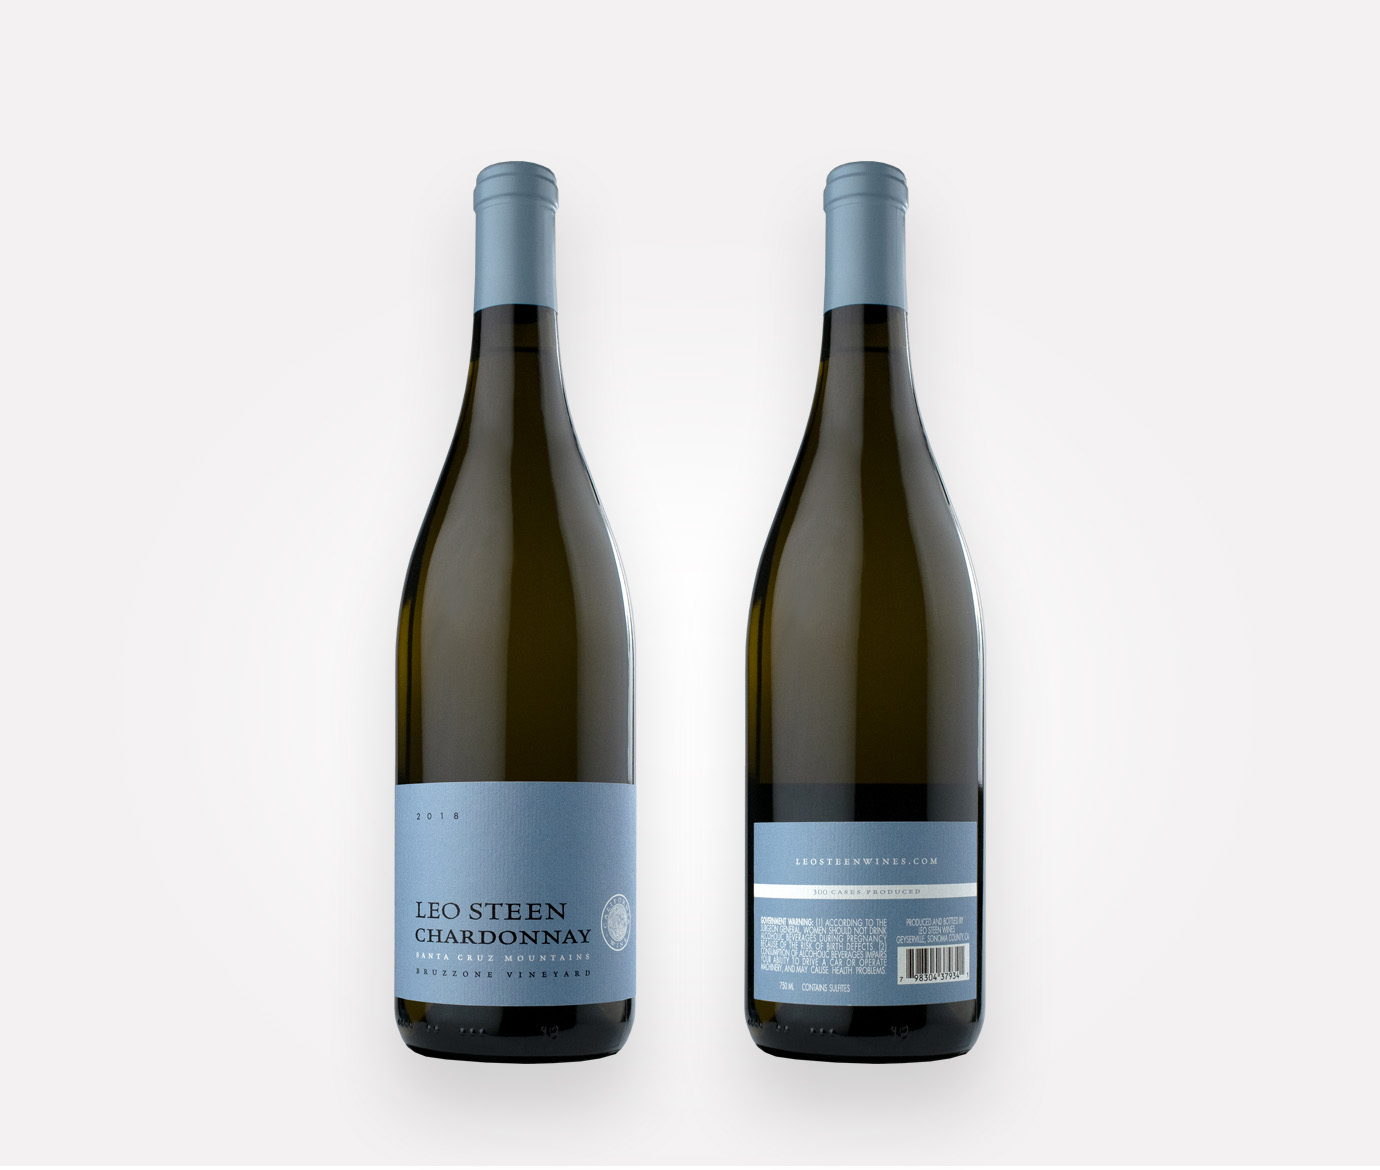 Leo Steen 2018 Chardonnay natural white wine from California